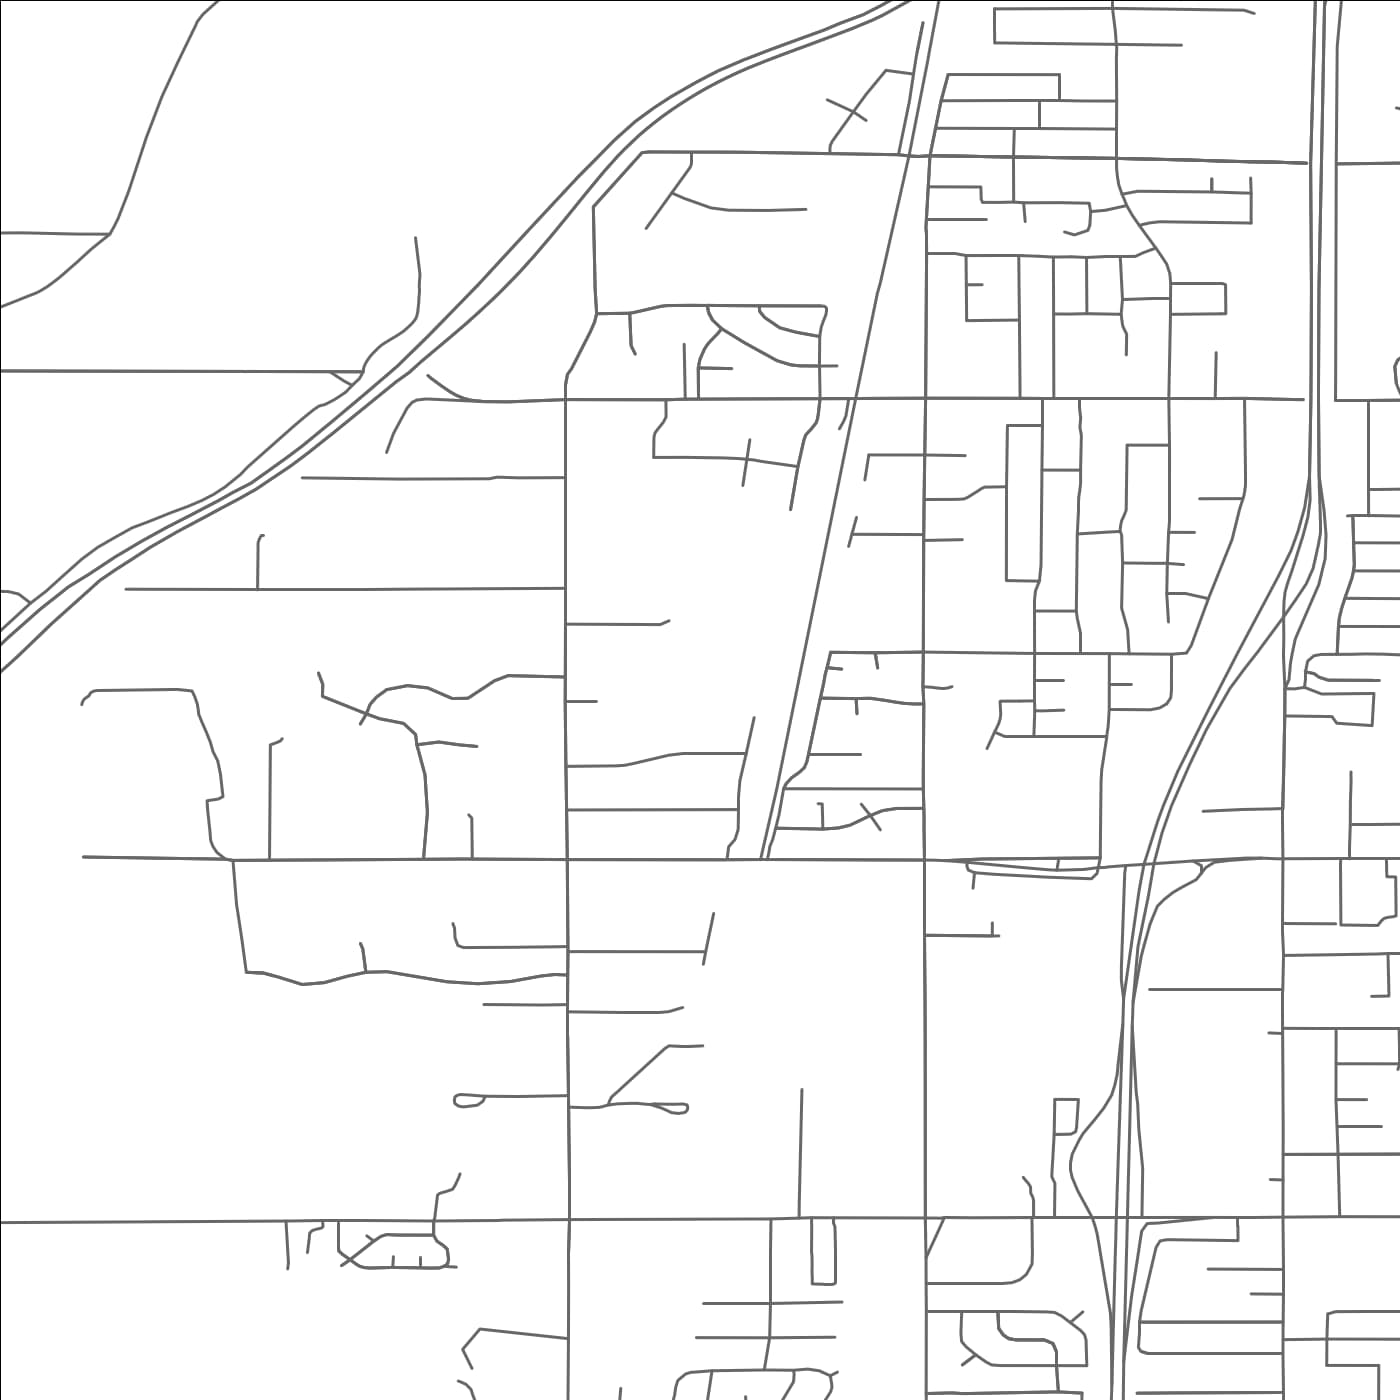 ROAD MAP OF WEST BOUNTIFUL, UTAH BY MAPBAKES